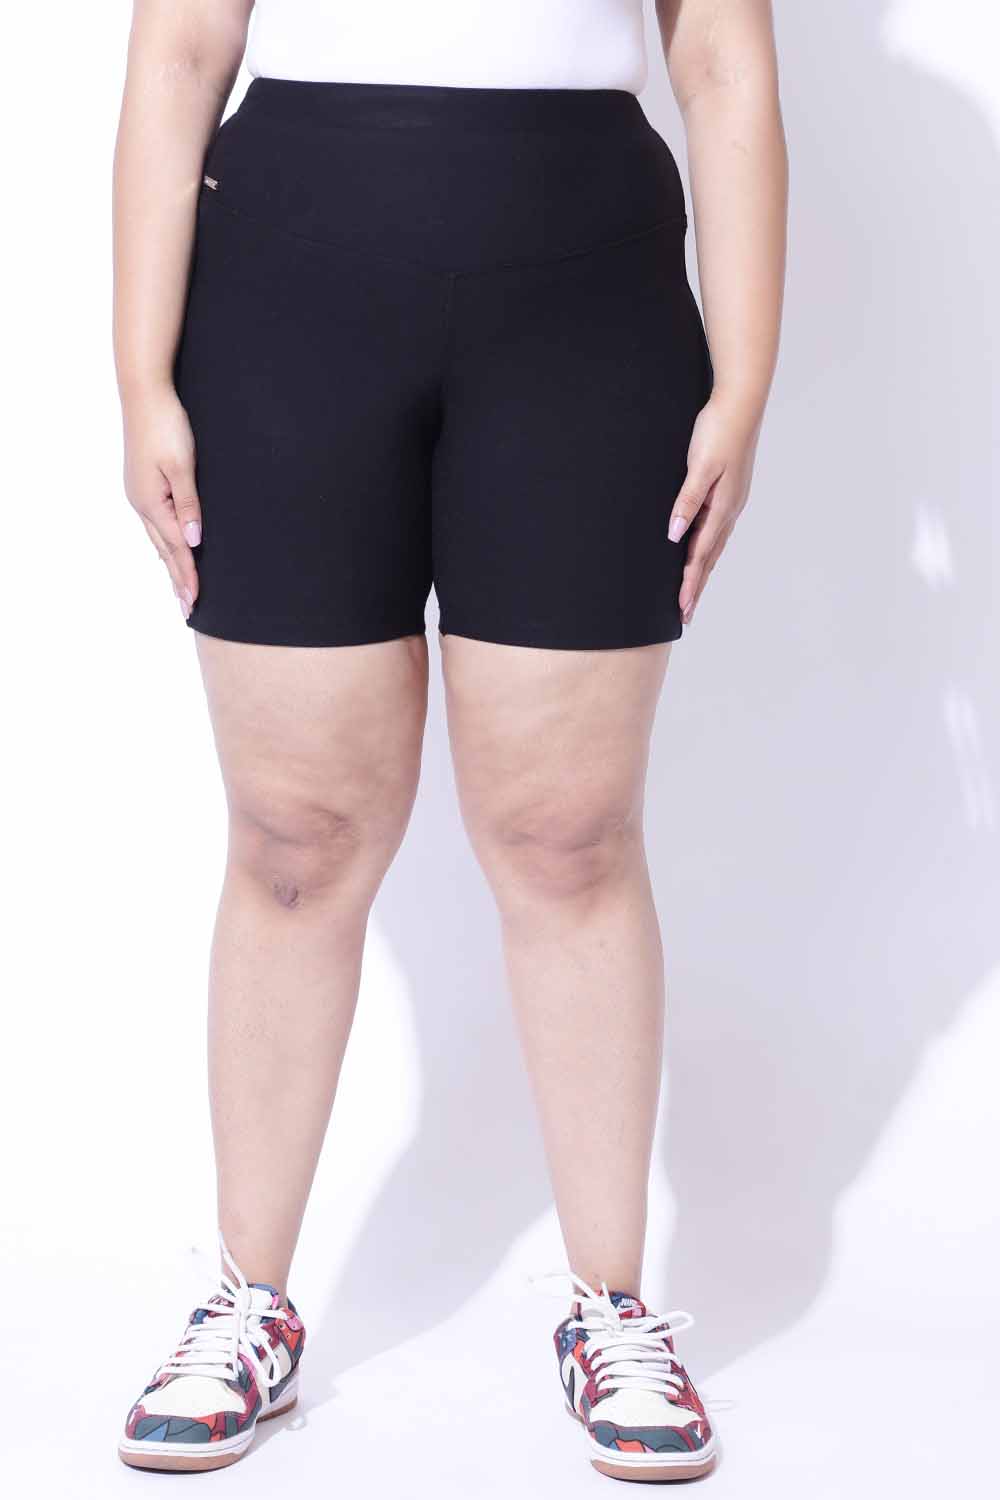 Buy Plus Size Black Tummy Shaper Shorts